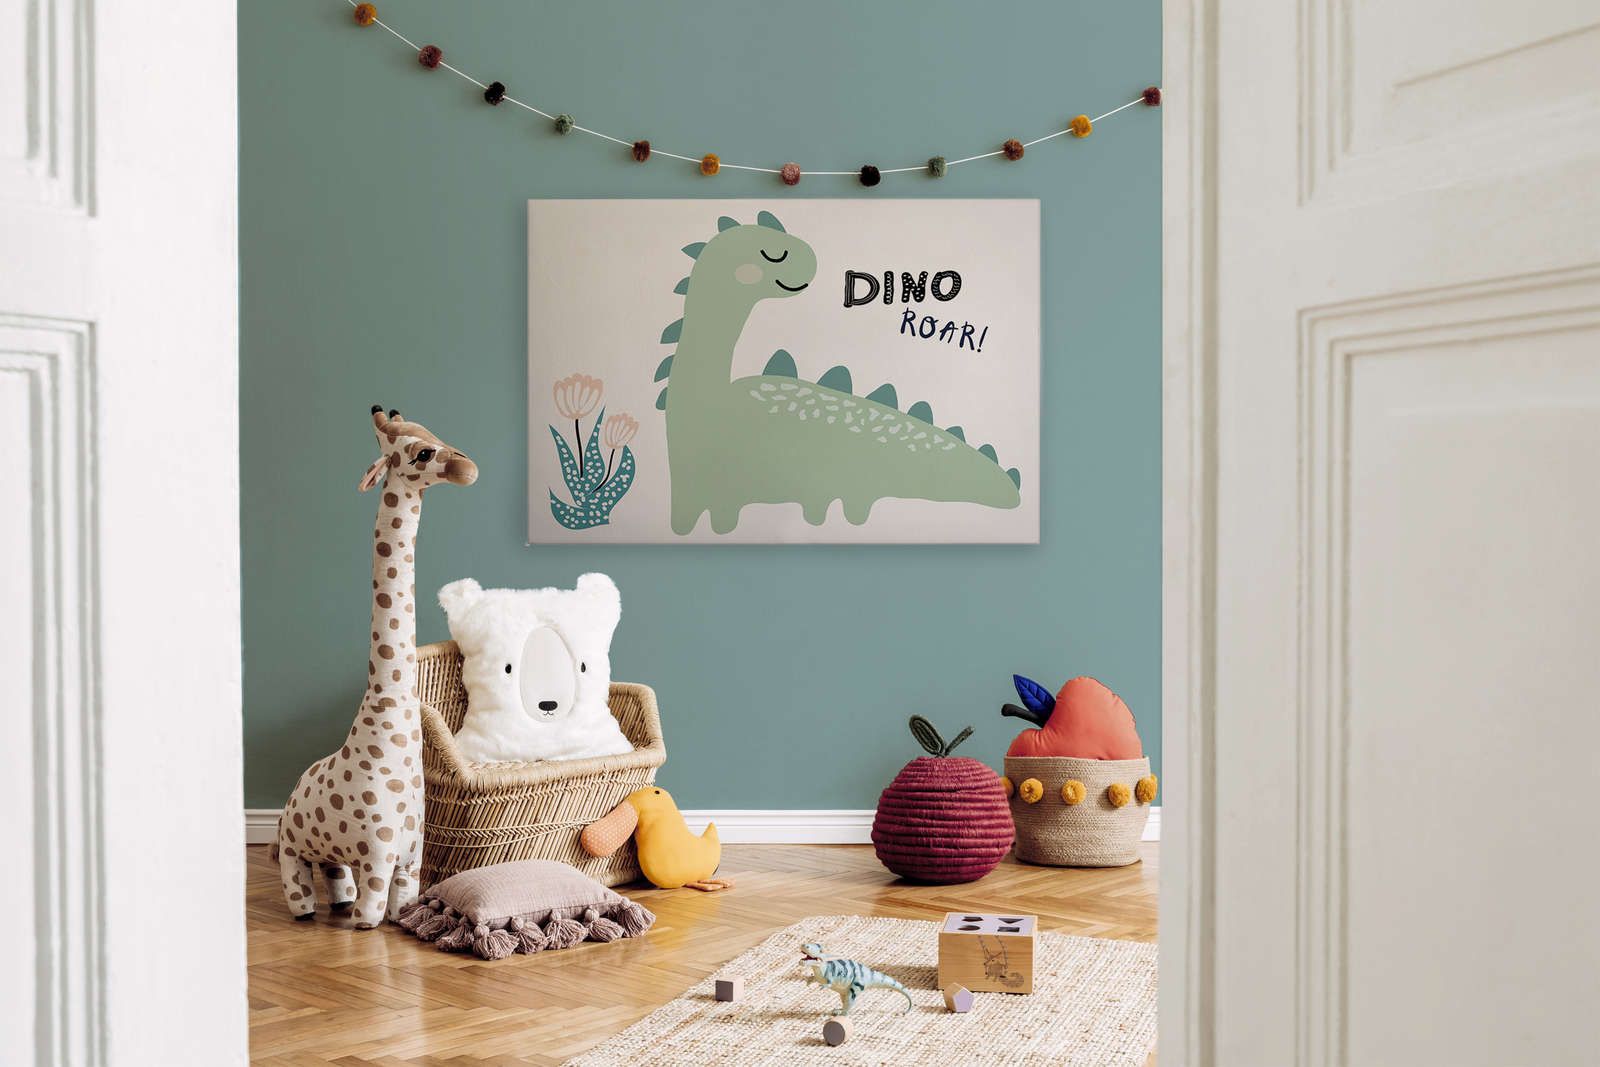             Toile avec dinosaure peint - 120 cm x 80 cm
        